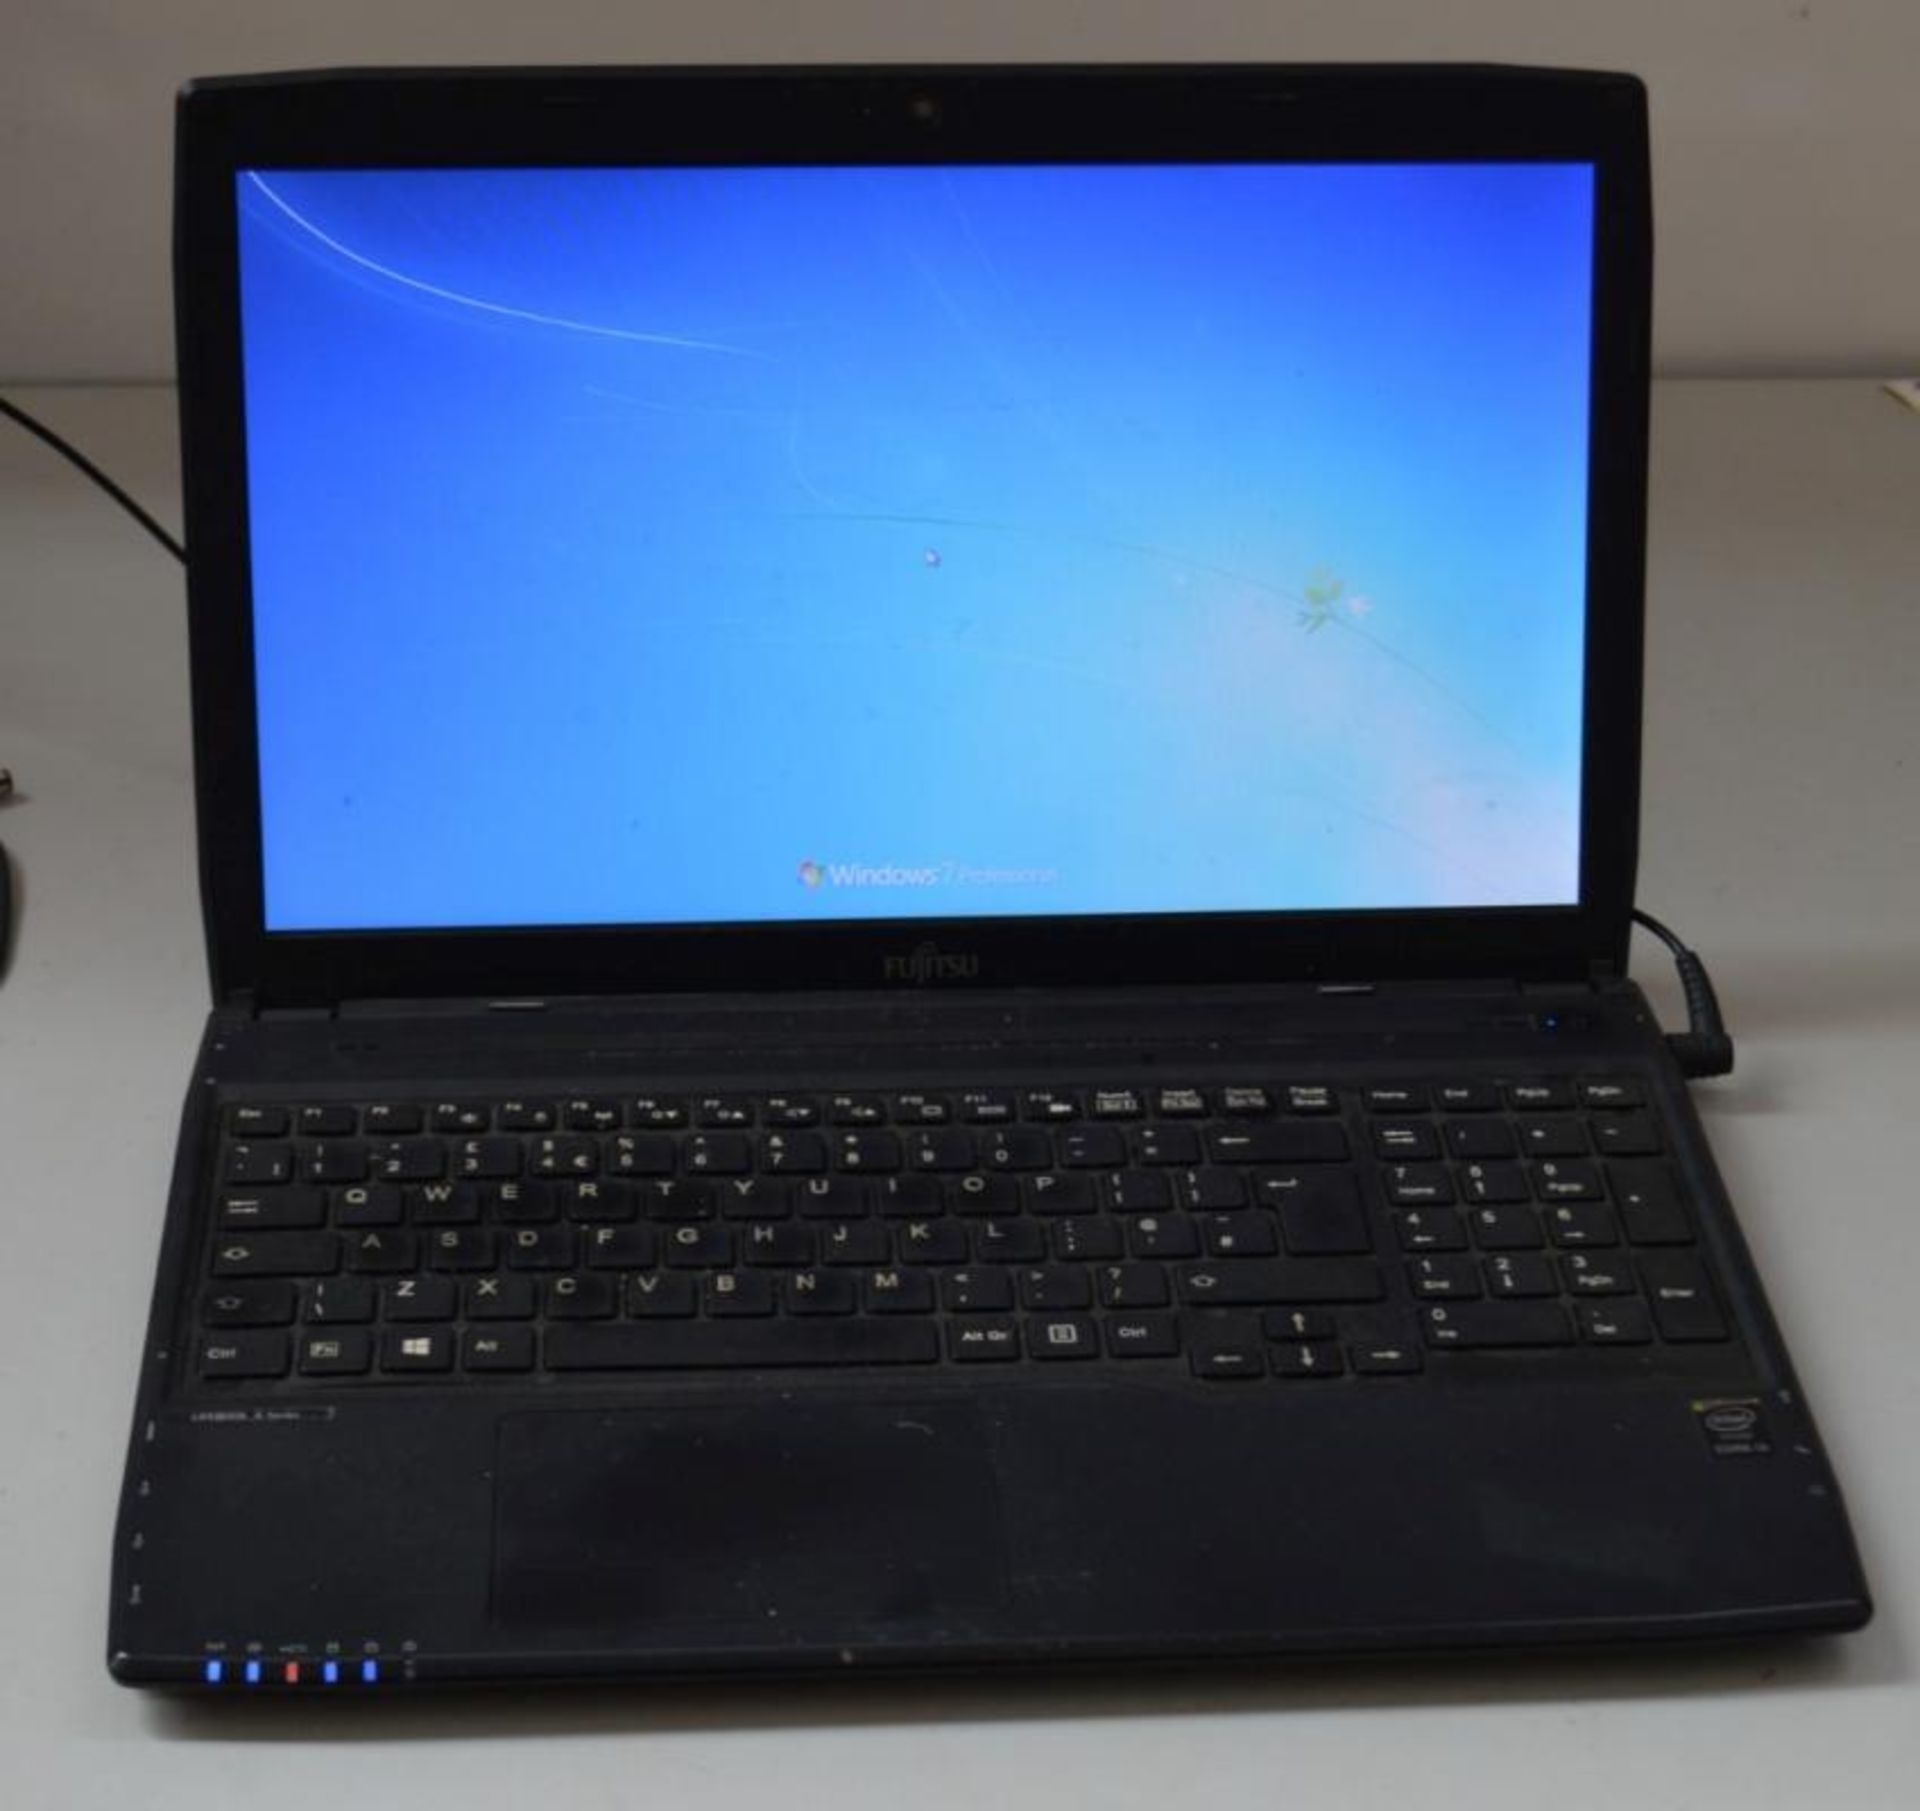 1 x Fujitsu LIFEBOOK A514 15.6-Inch Laptop Computer Intel Core i3 1.7 GHz, 4 GB RAM - Hard Drive N